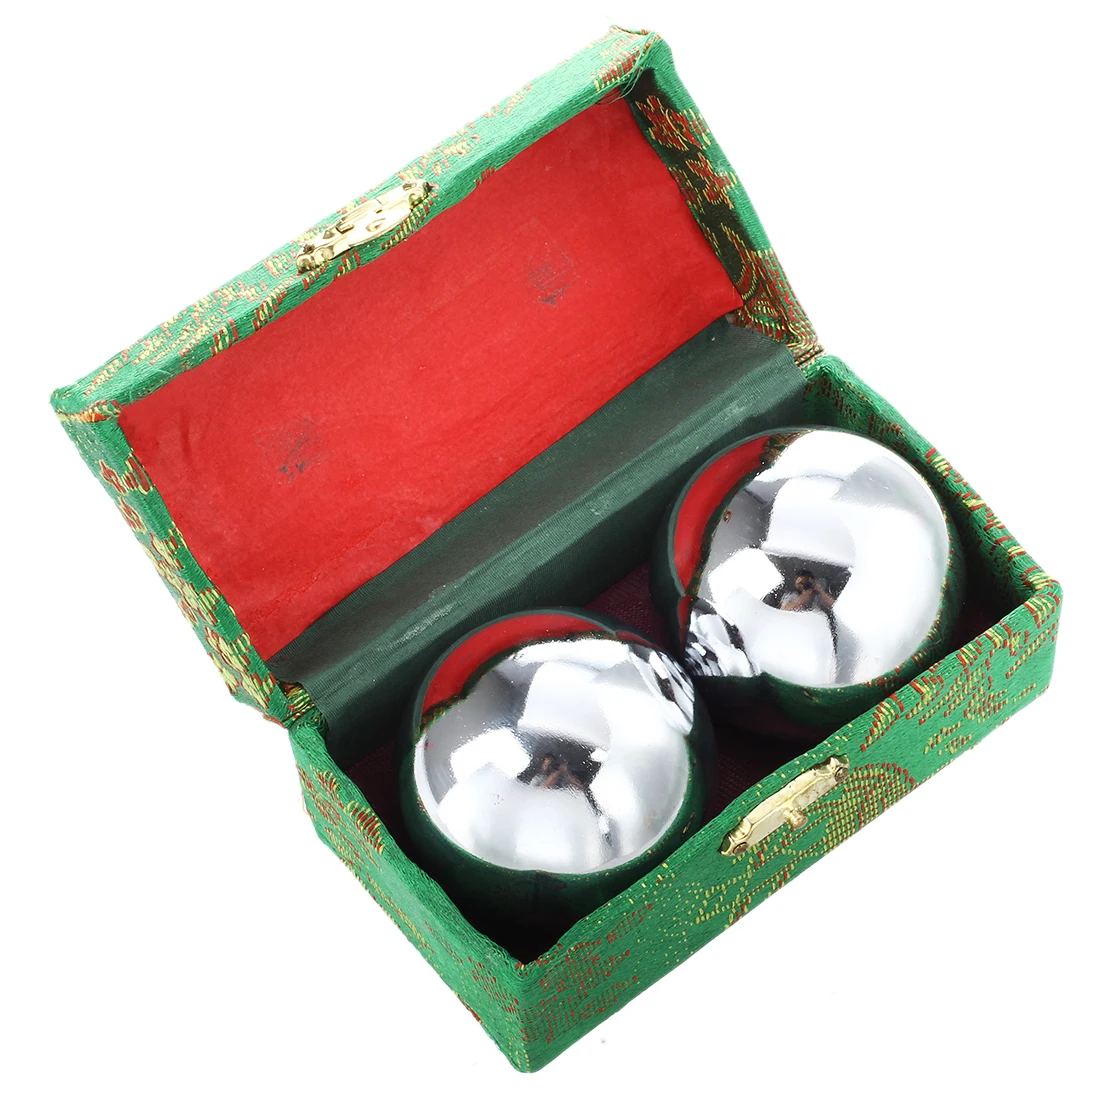 52 мм шарики baoding китайский Министерство здравоохранения мячики для снятия стресса-хром цвет